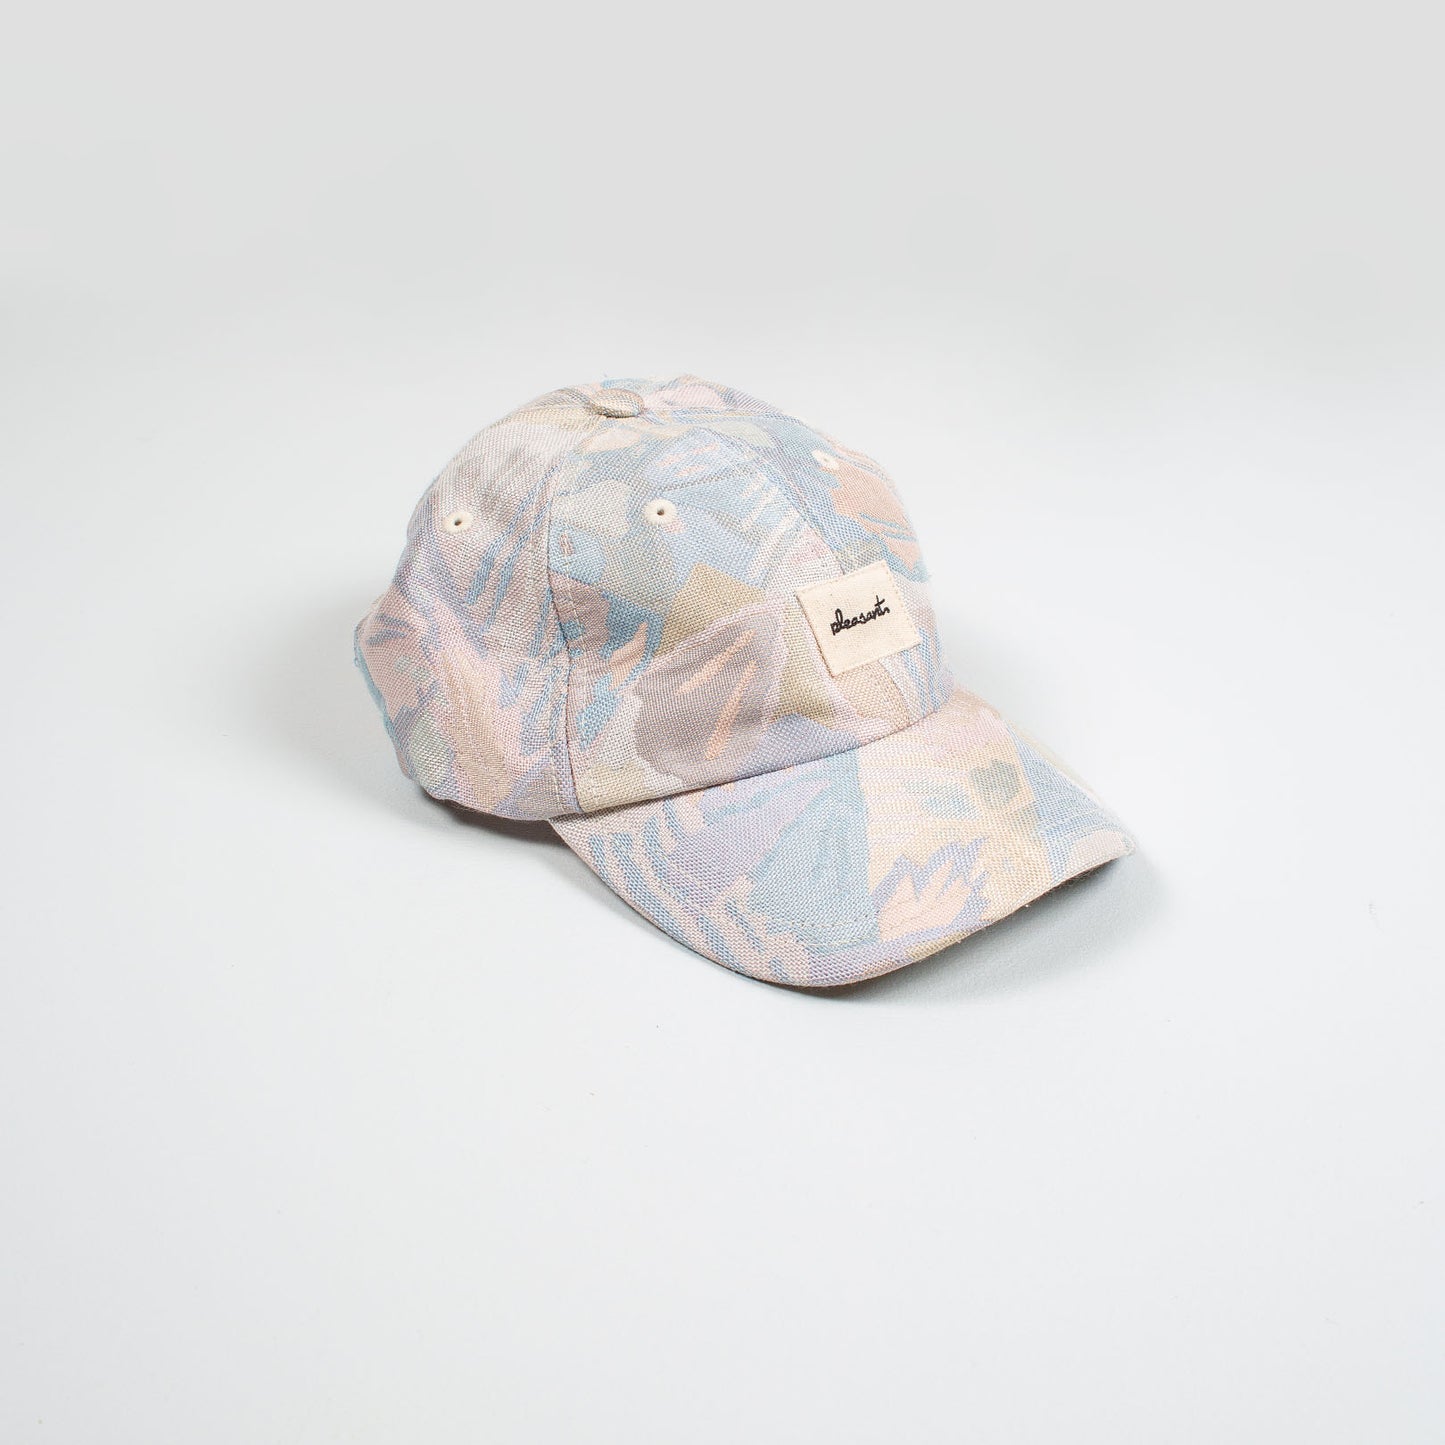 Pastel upcycled cap